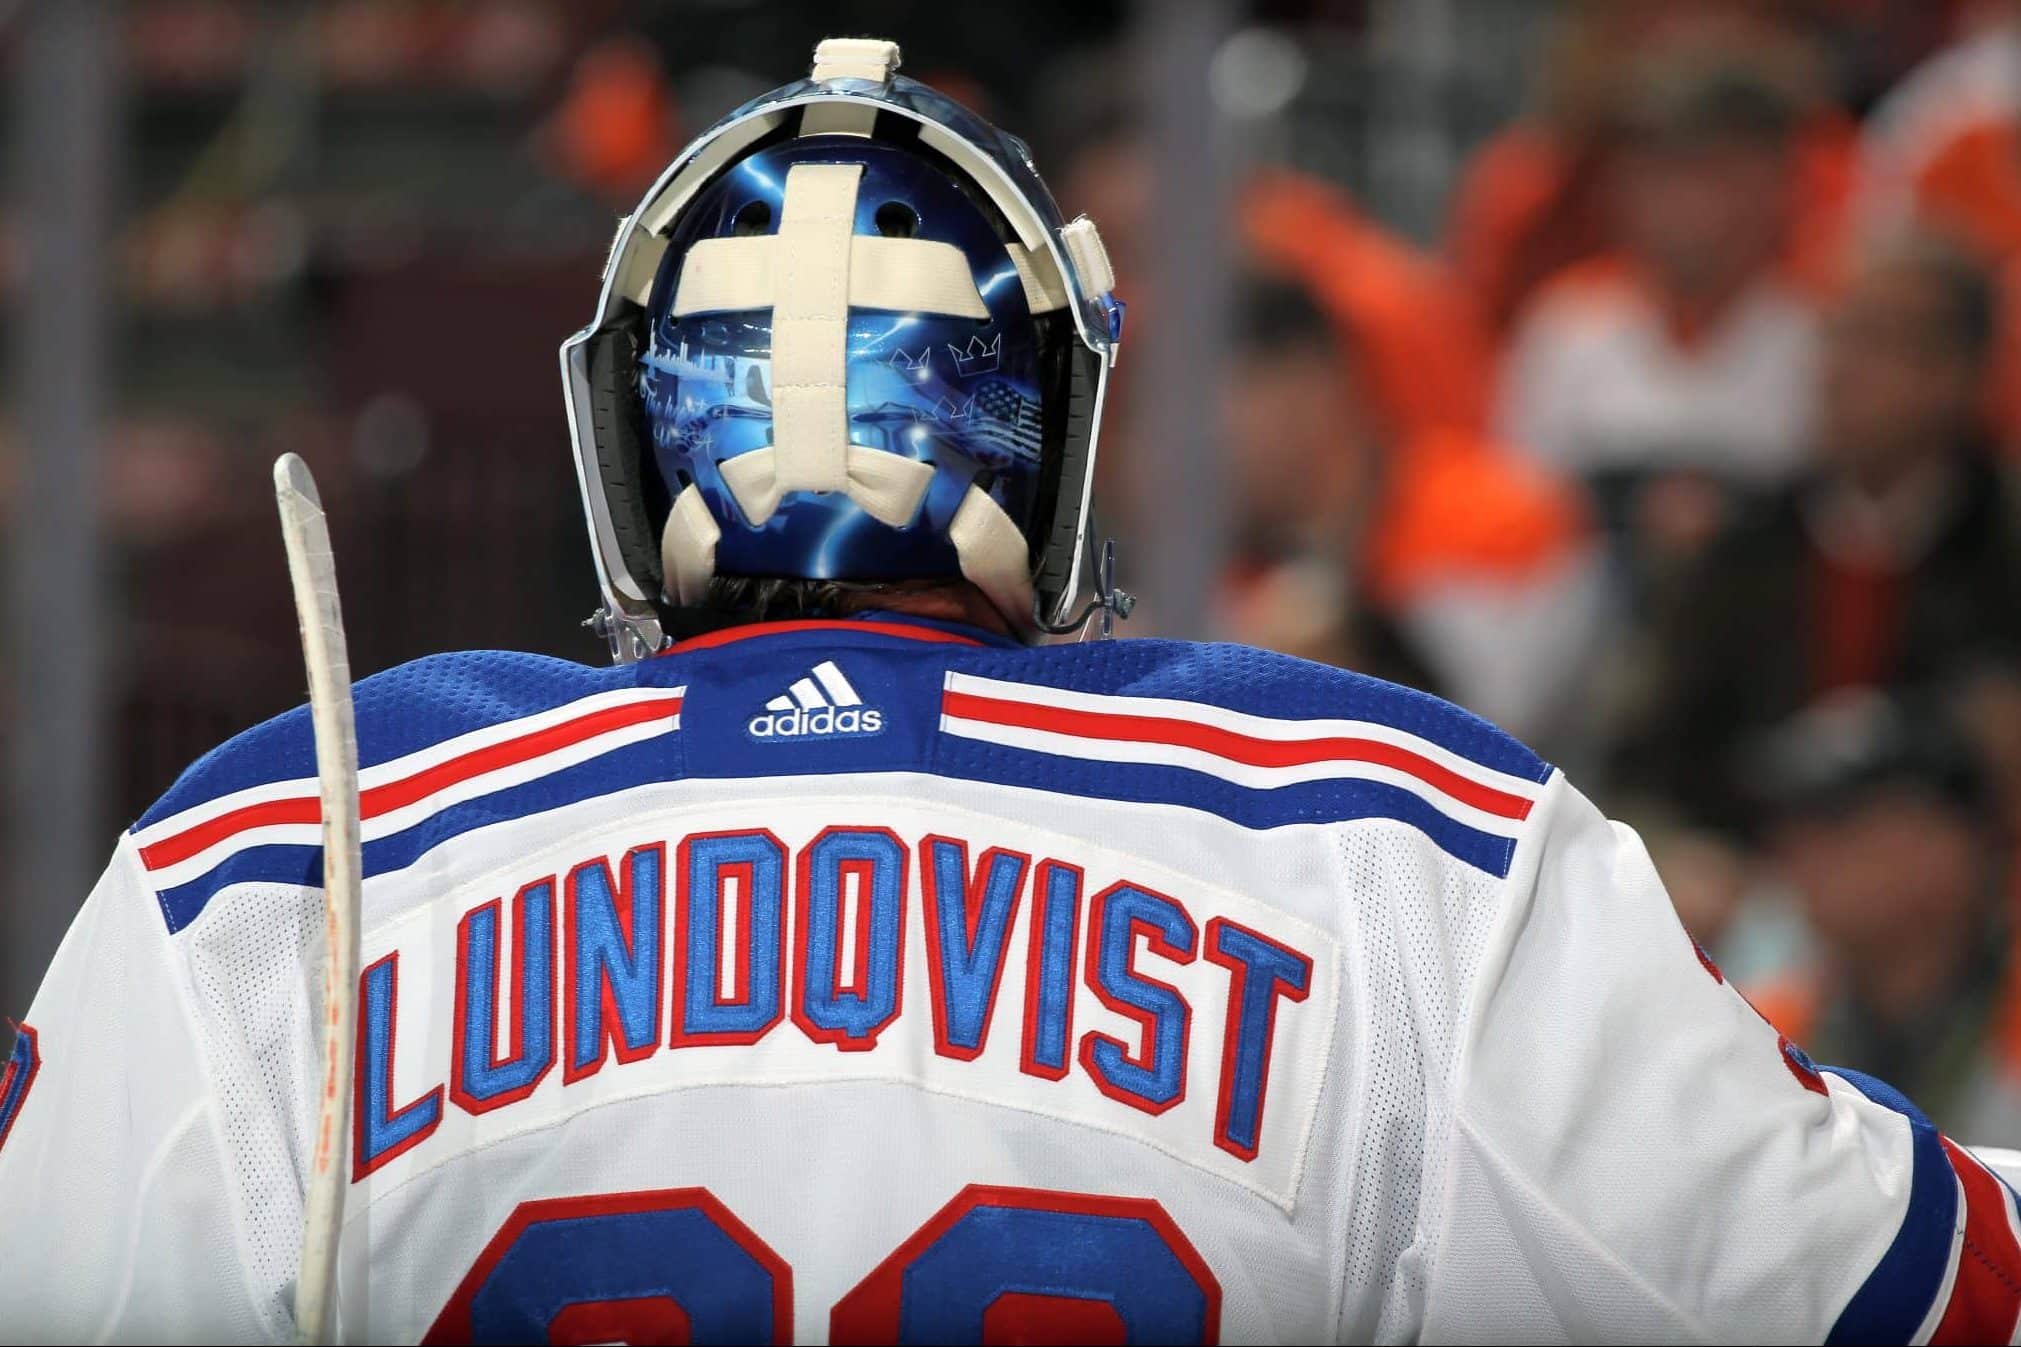 New York Rangers G Lundqvist taking shots already